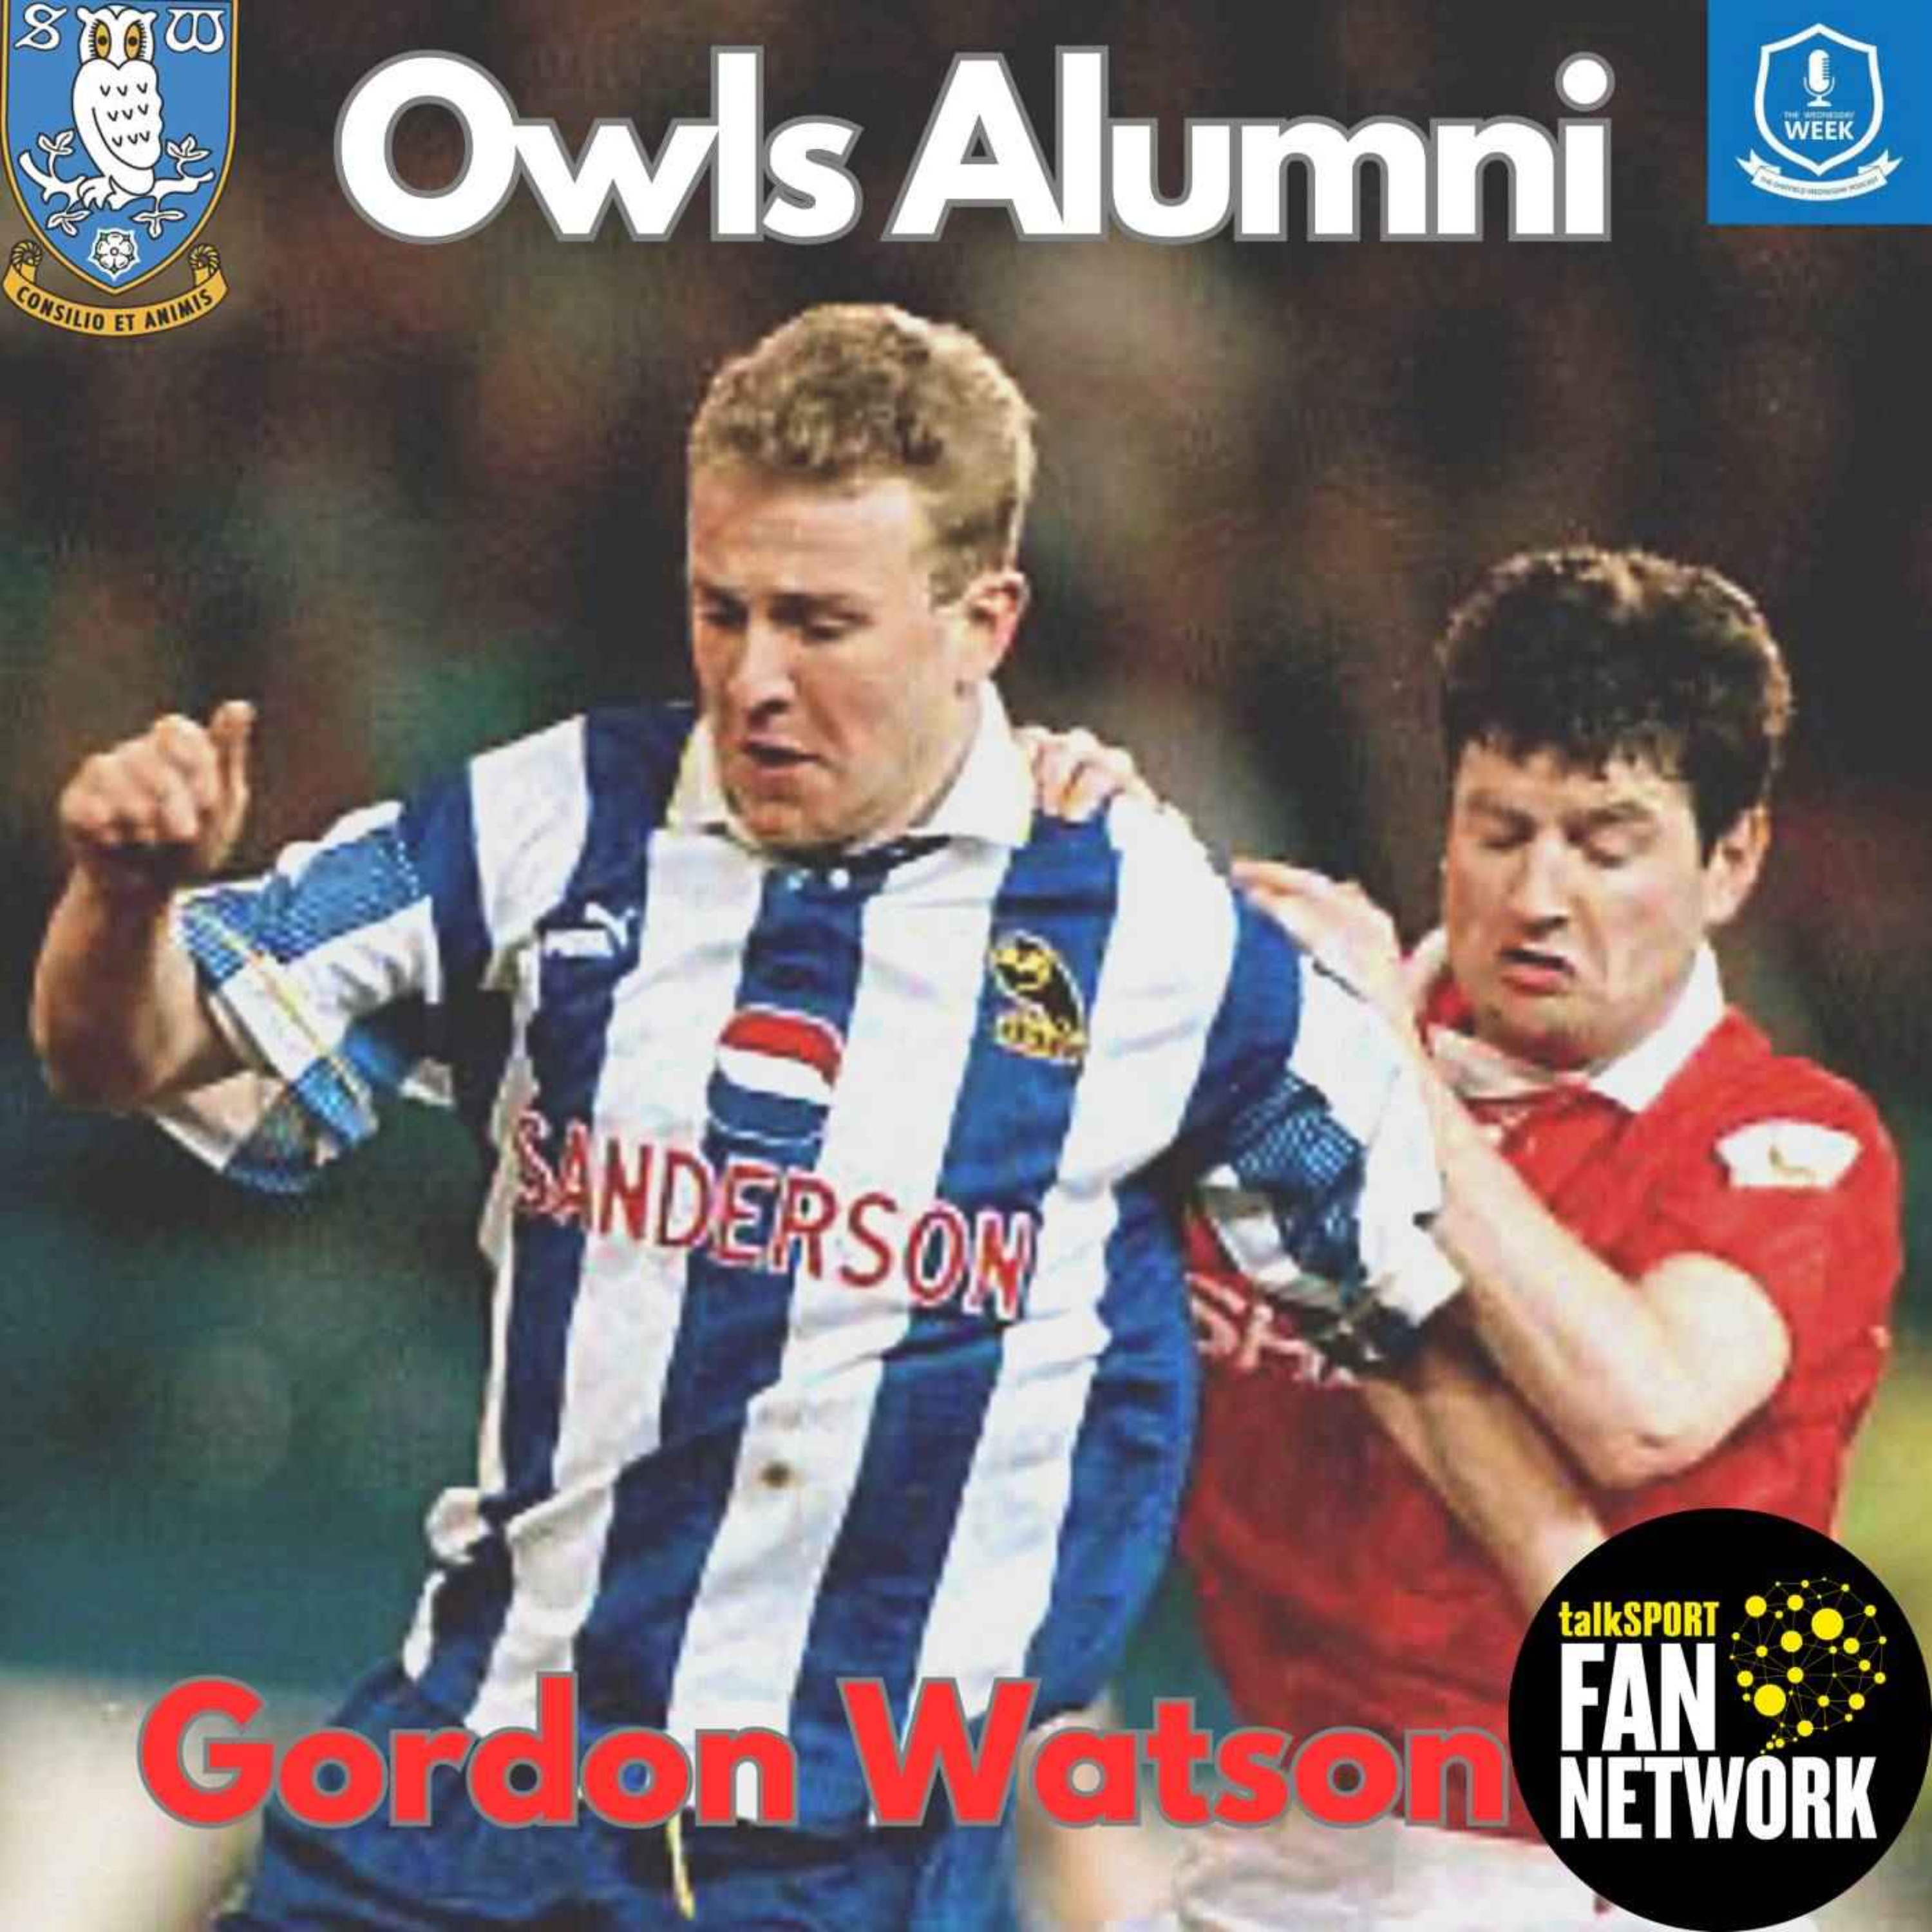 Owls Alumni - Gordon Watson